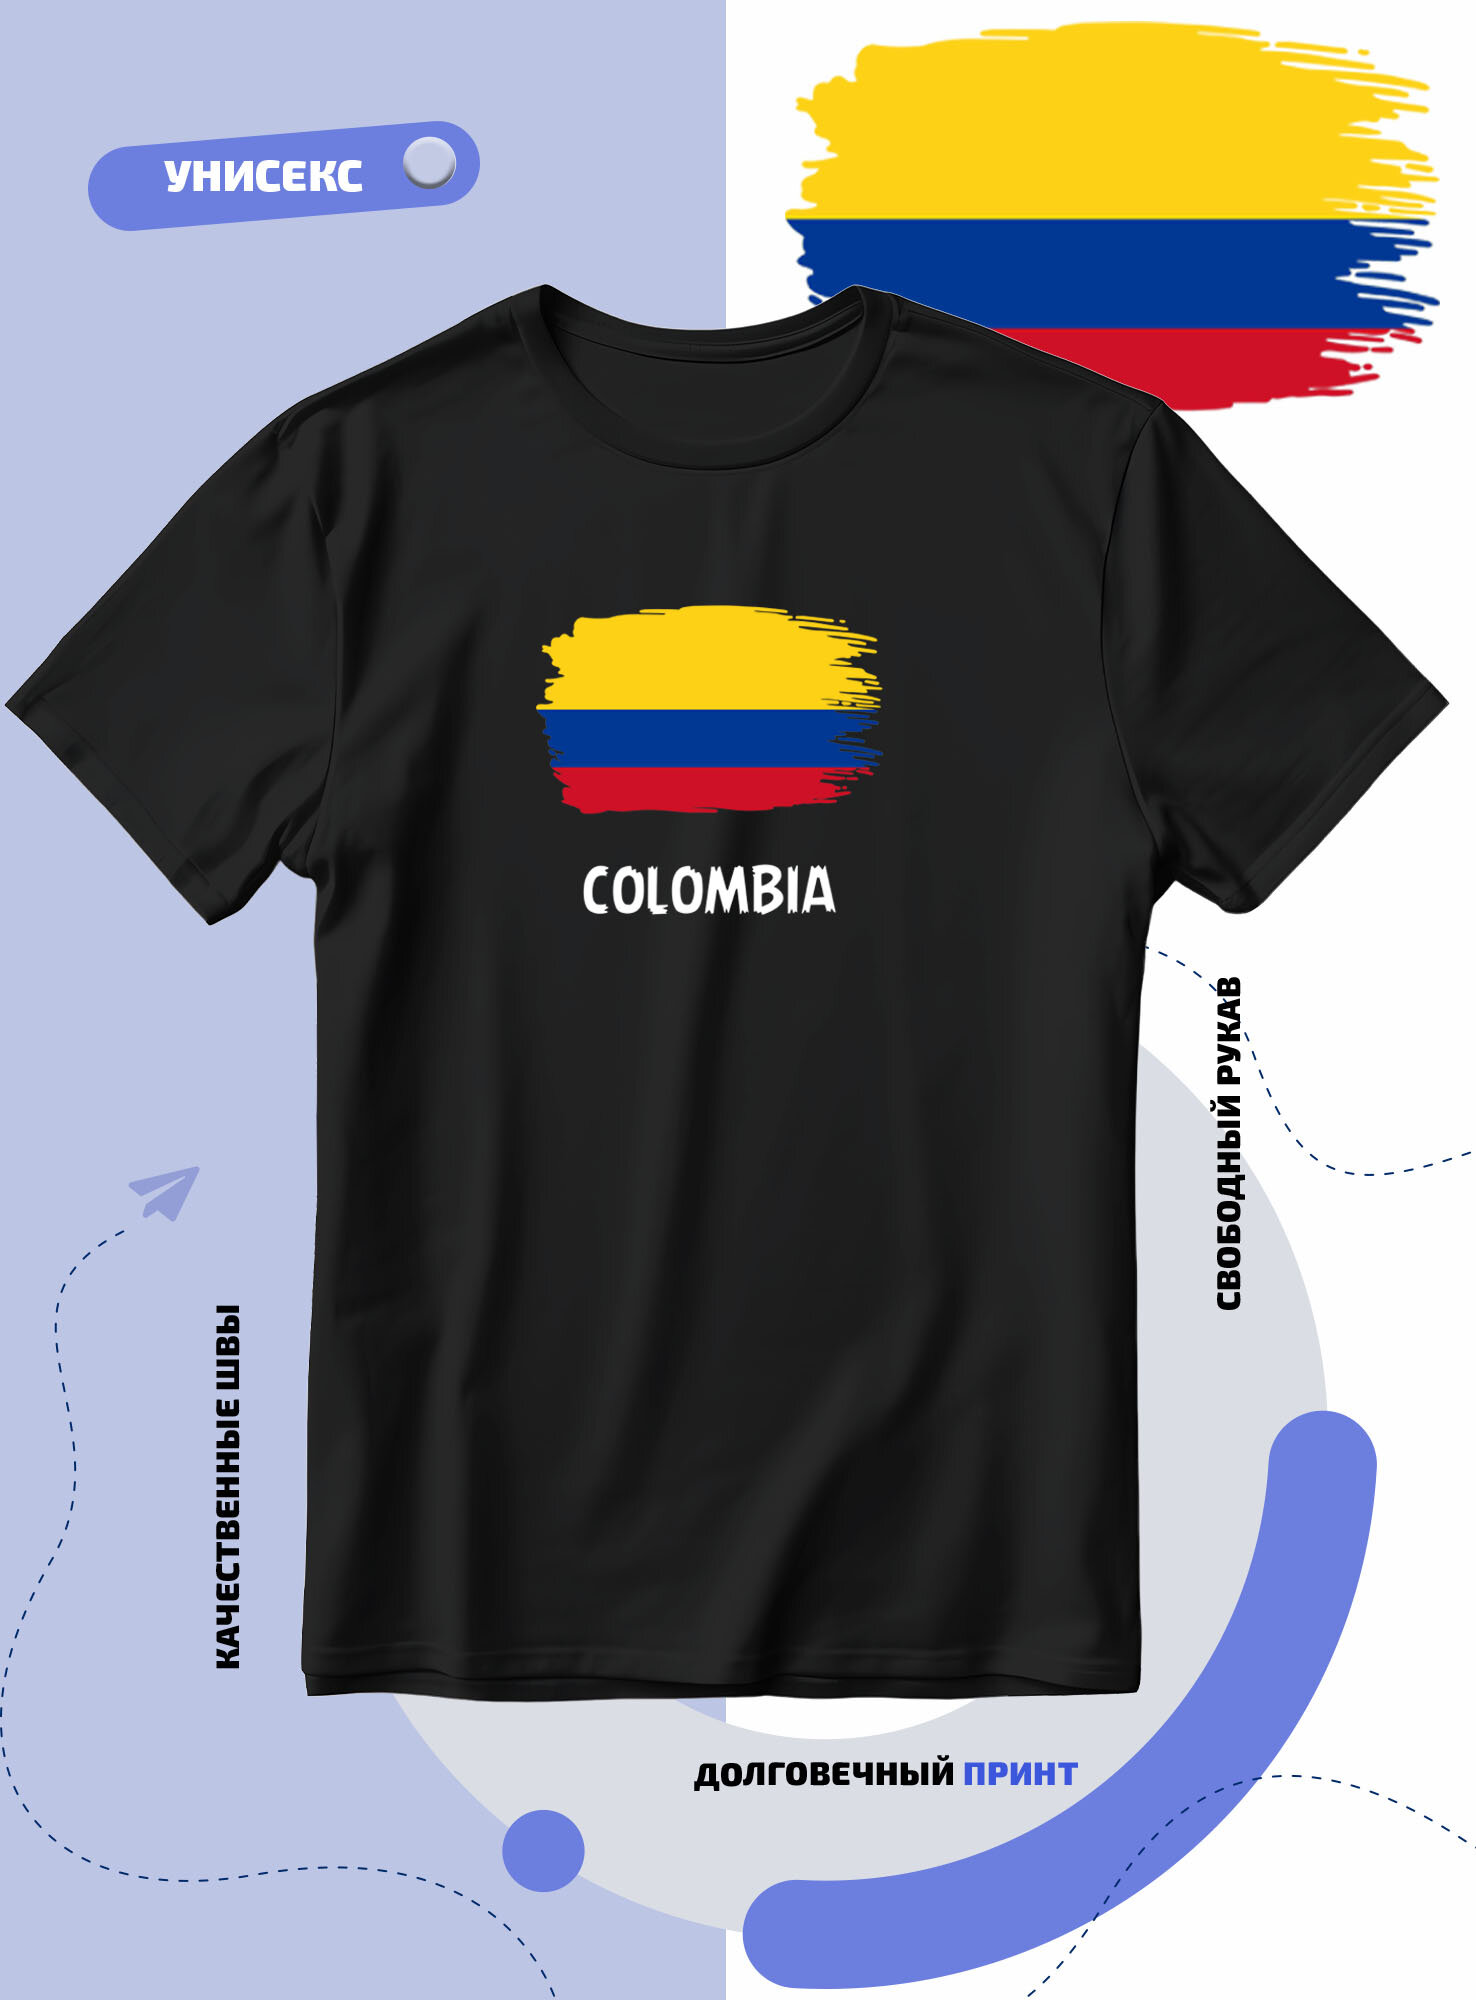 Футболка SMAIL-P с флагом Колумбии-Colombia